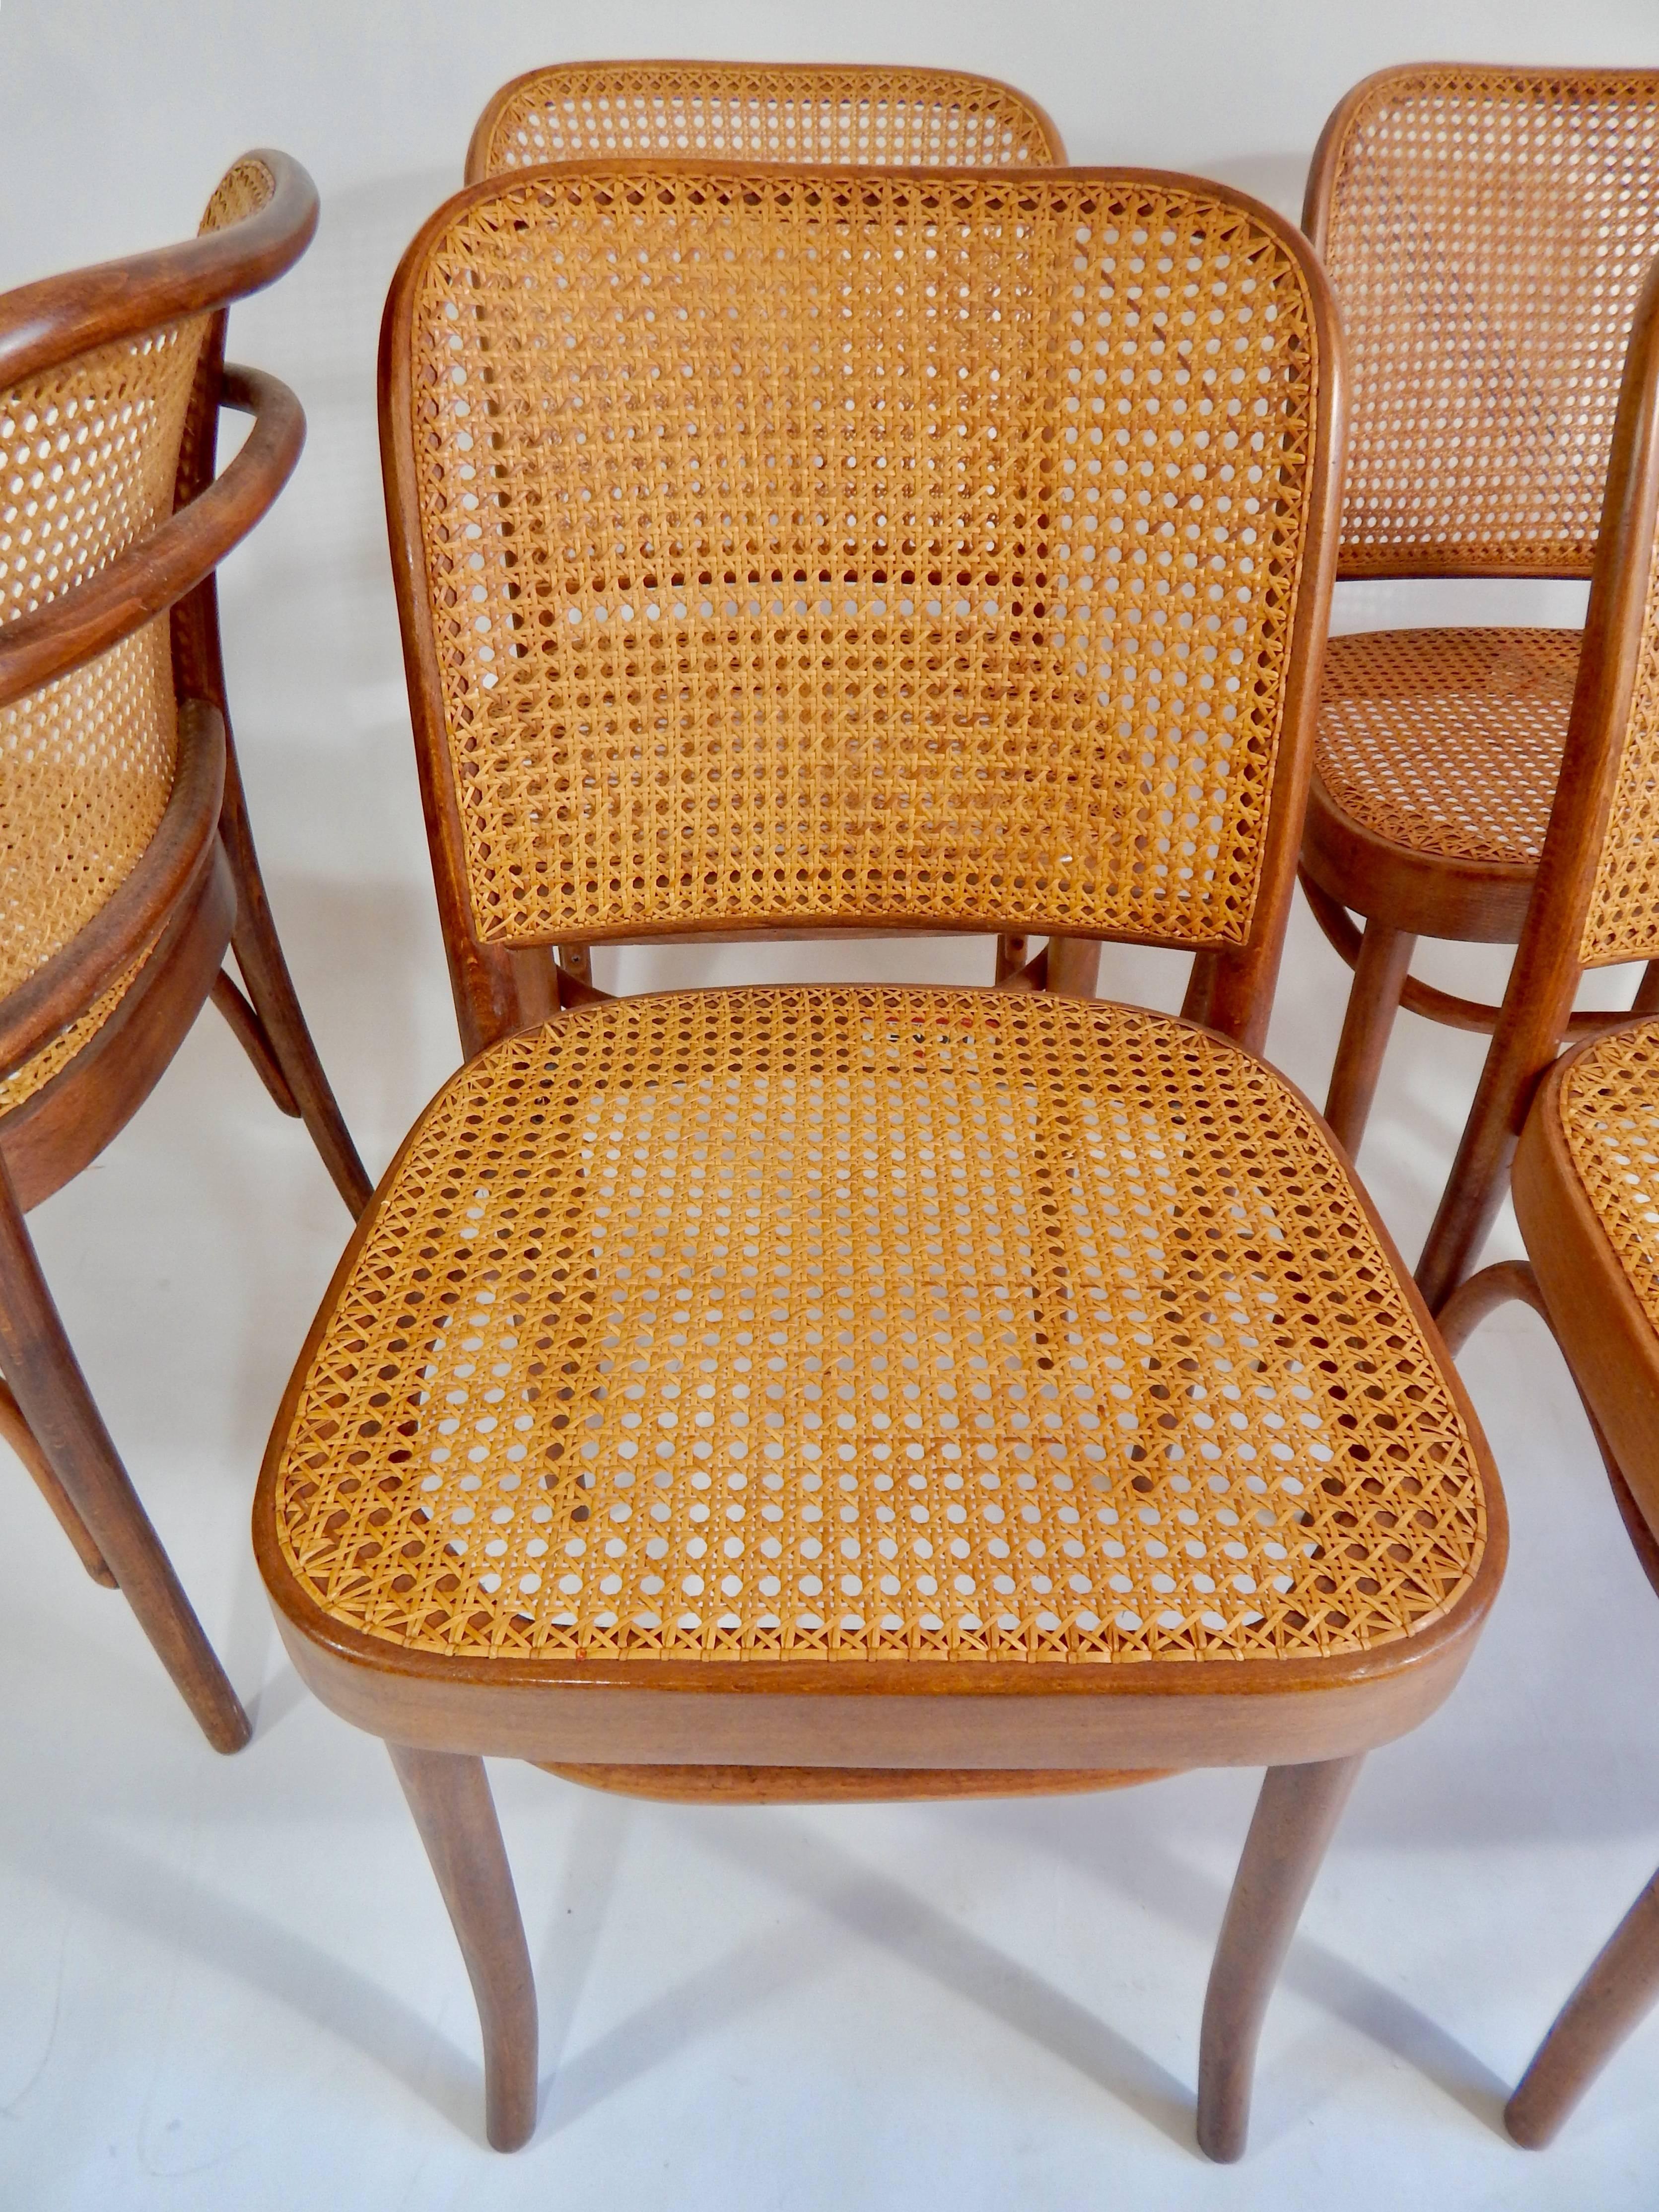 thonet chair made in poland